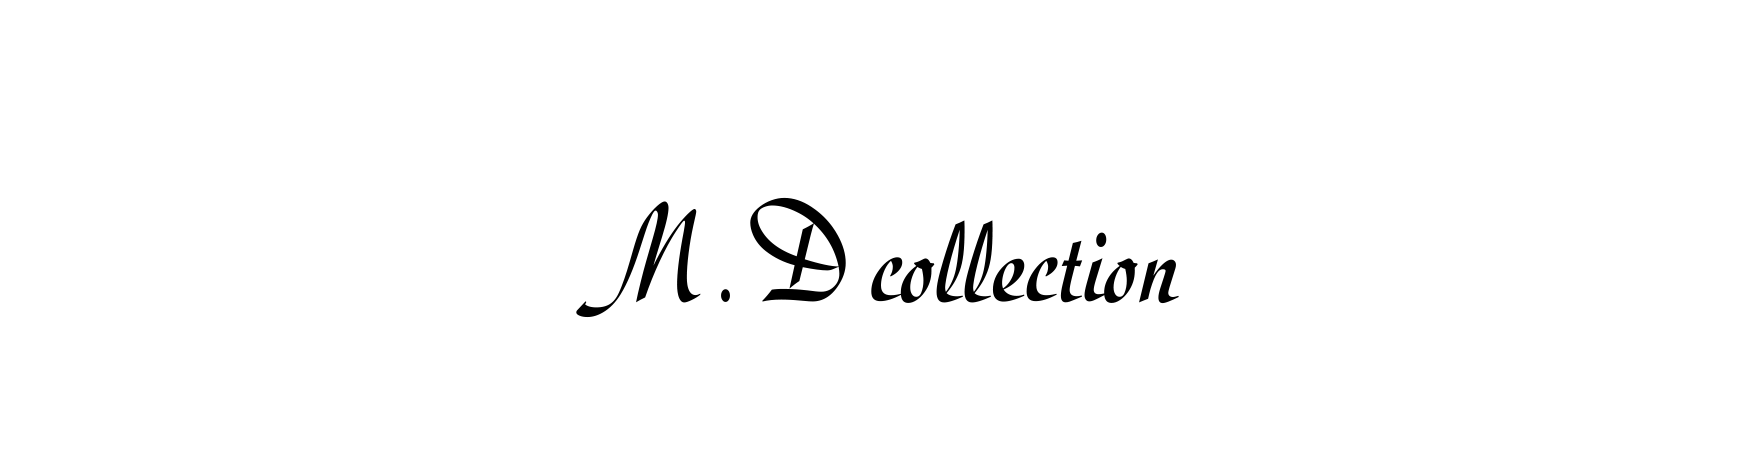 M.D Collection